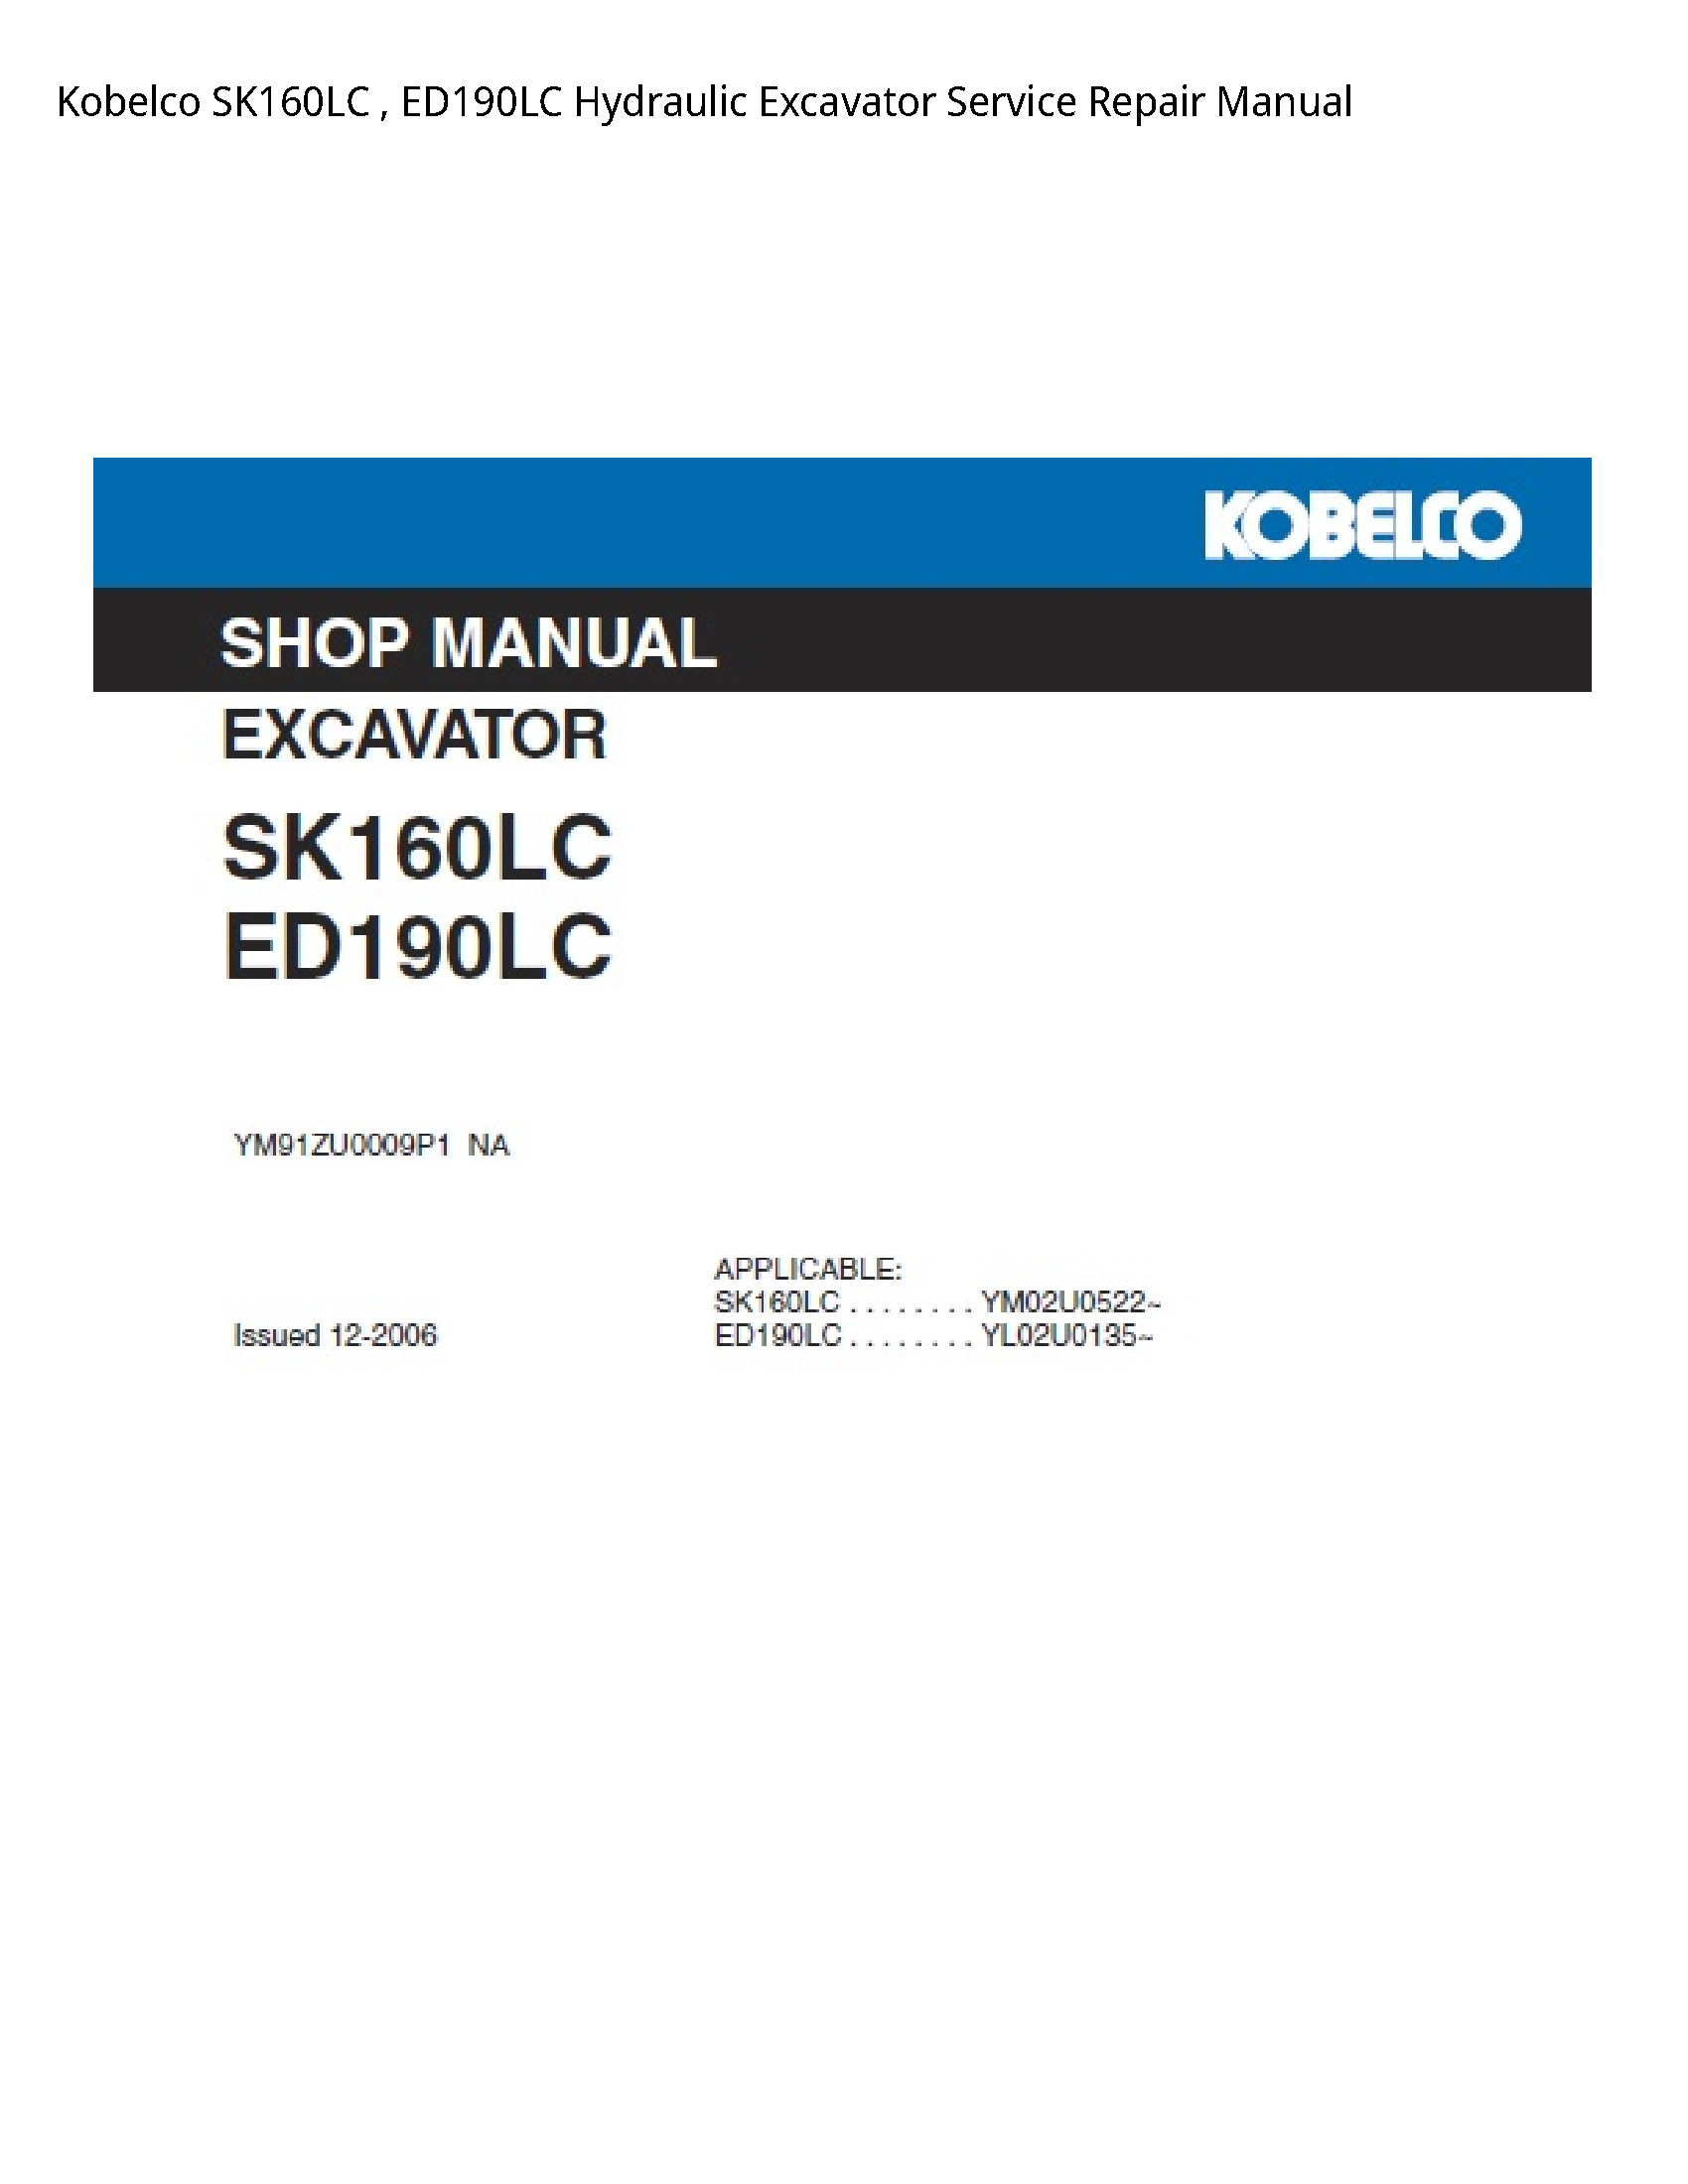 Kobelco SK160LC Hydraulic Excavator manual